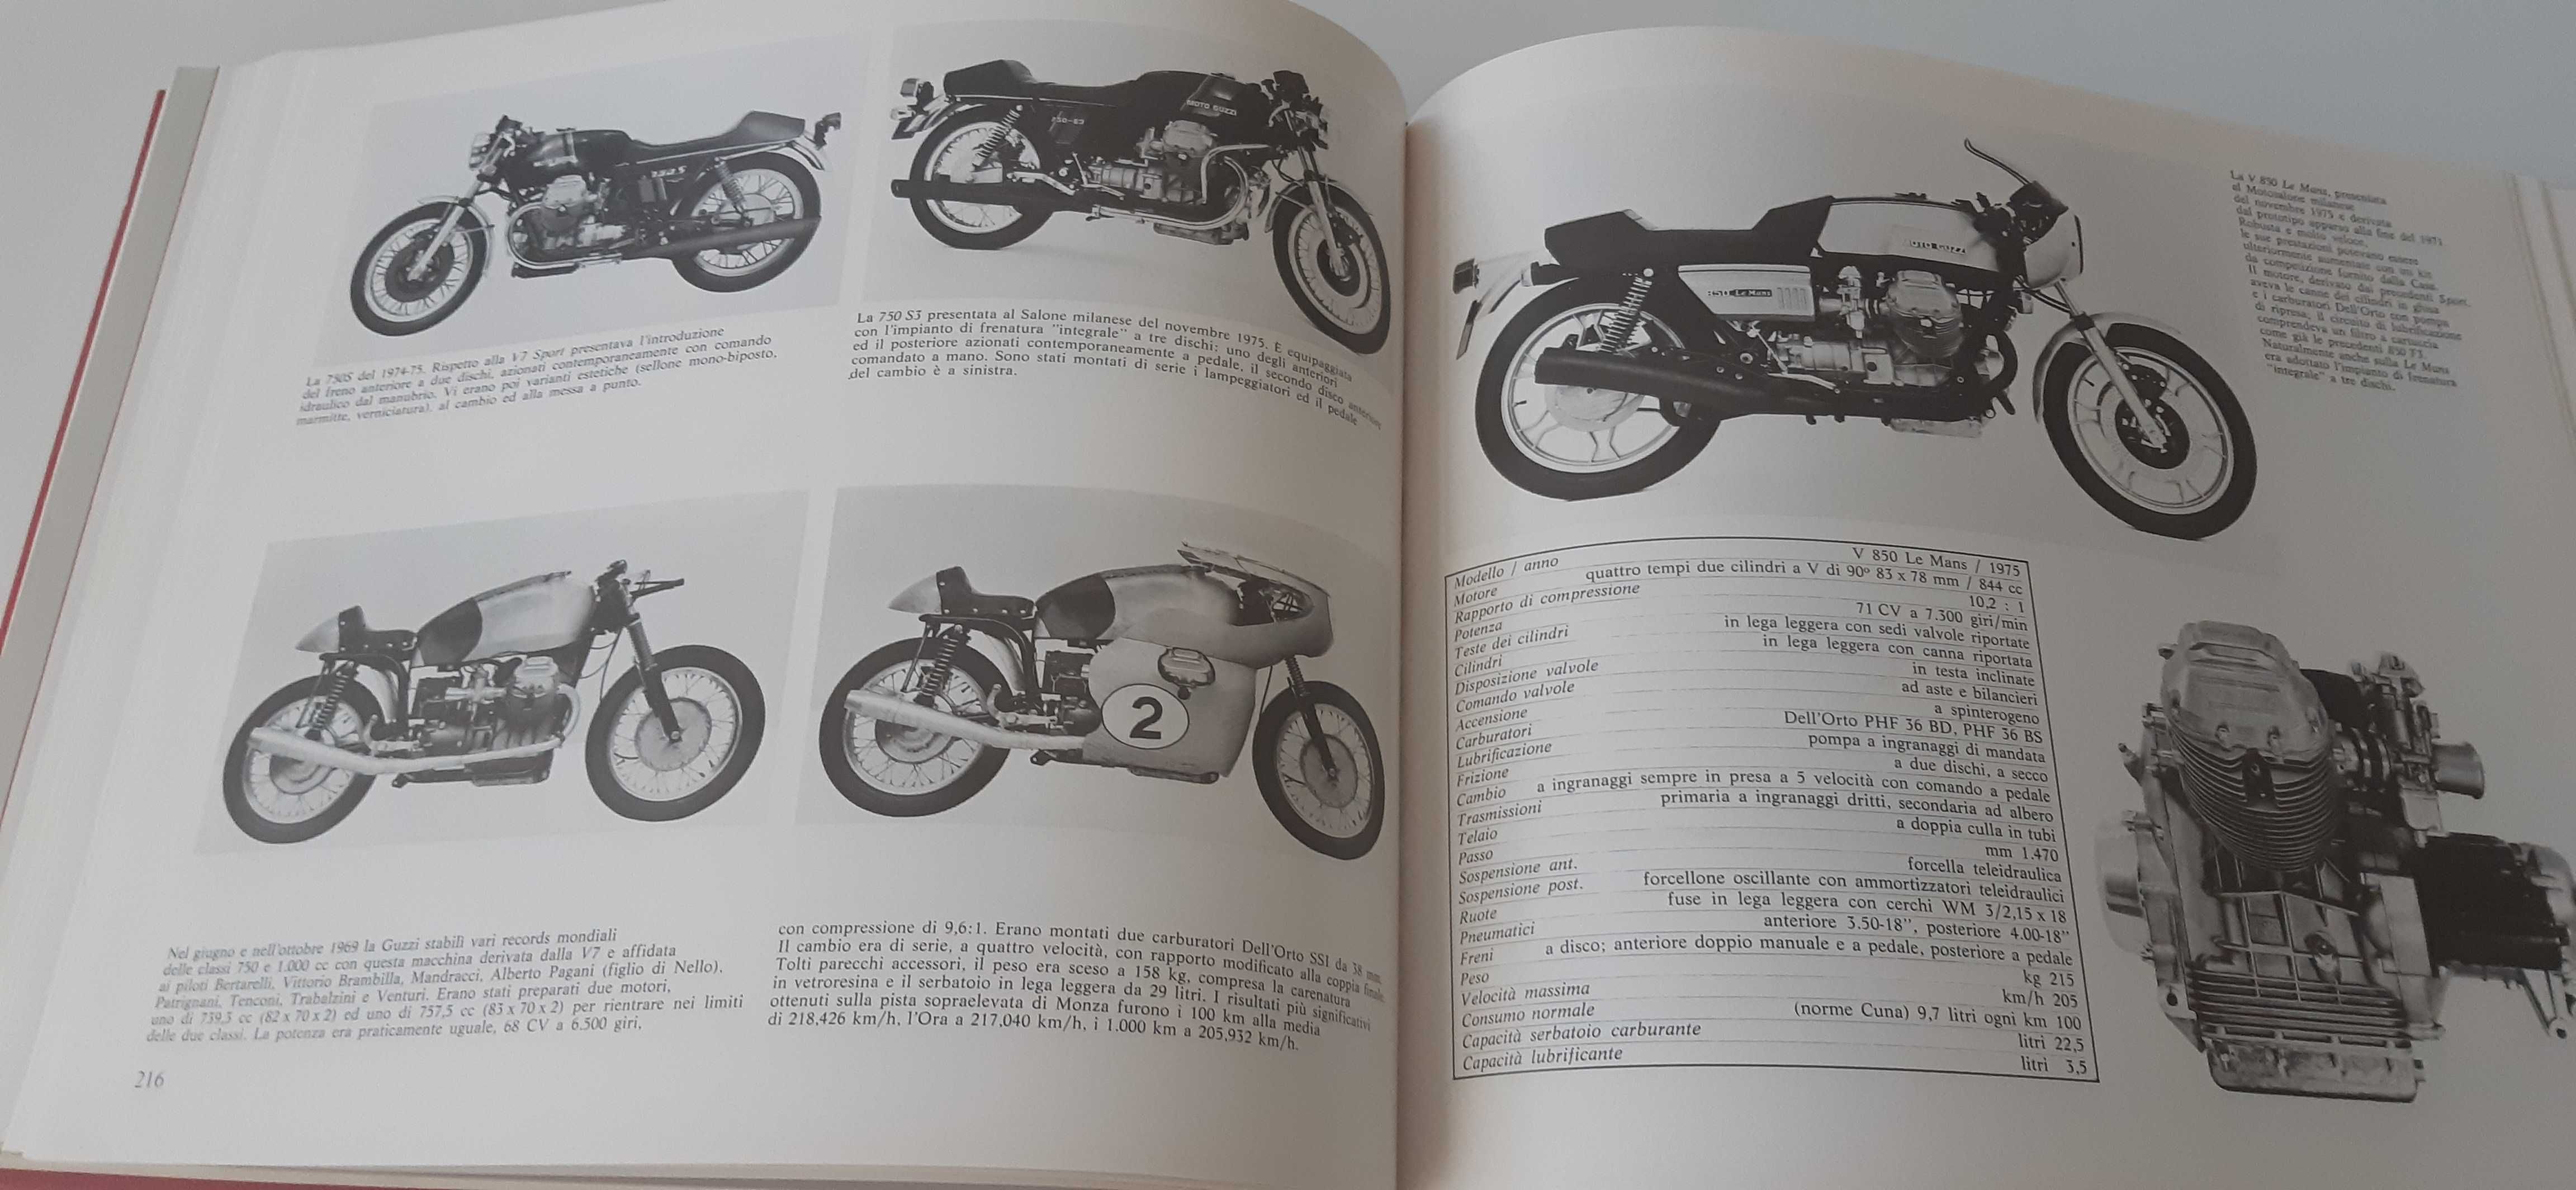 Livro Moto Guzzi 2